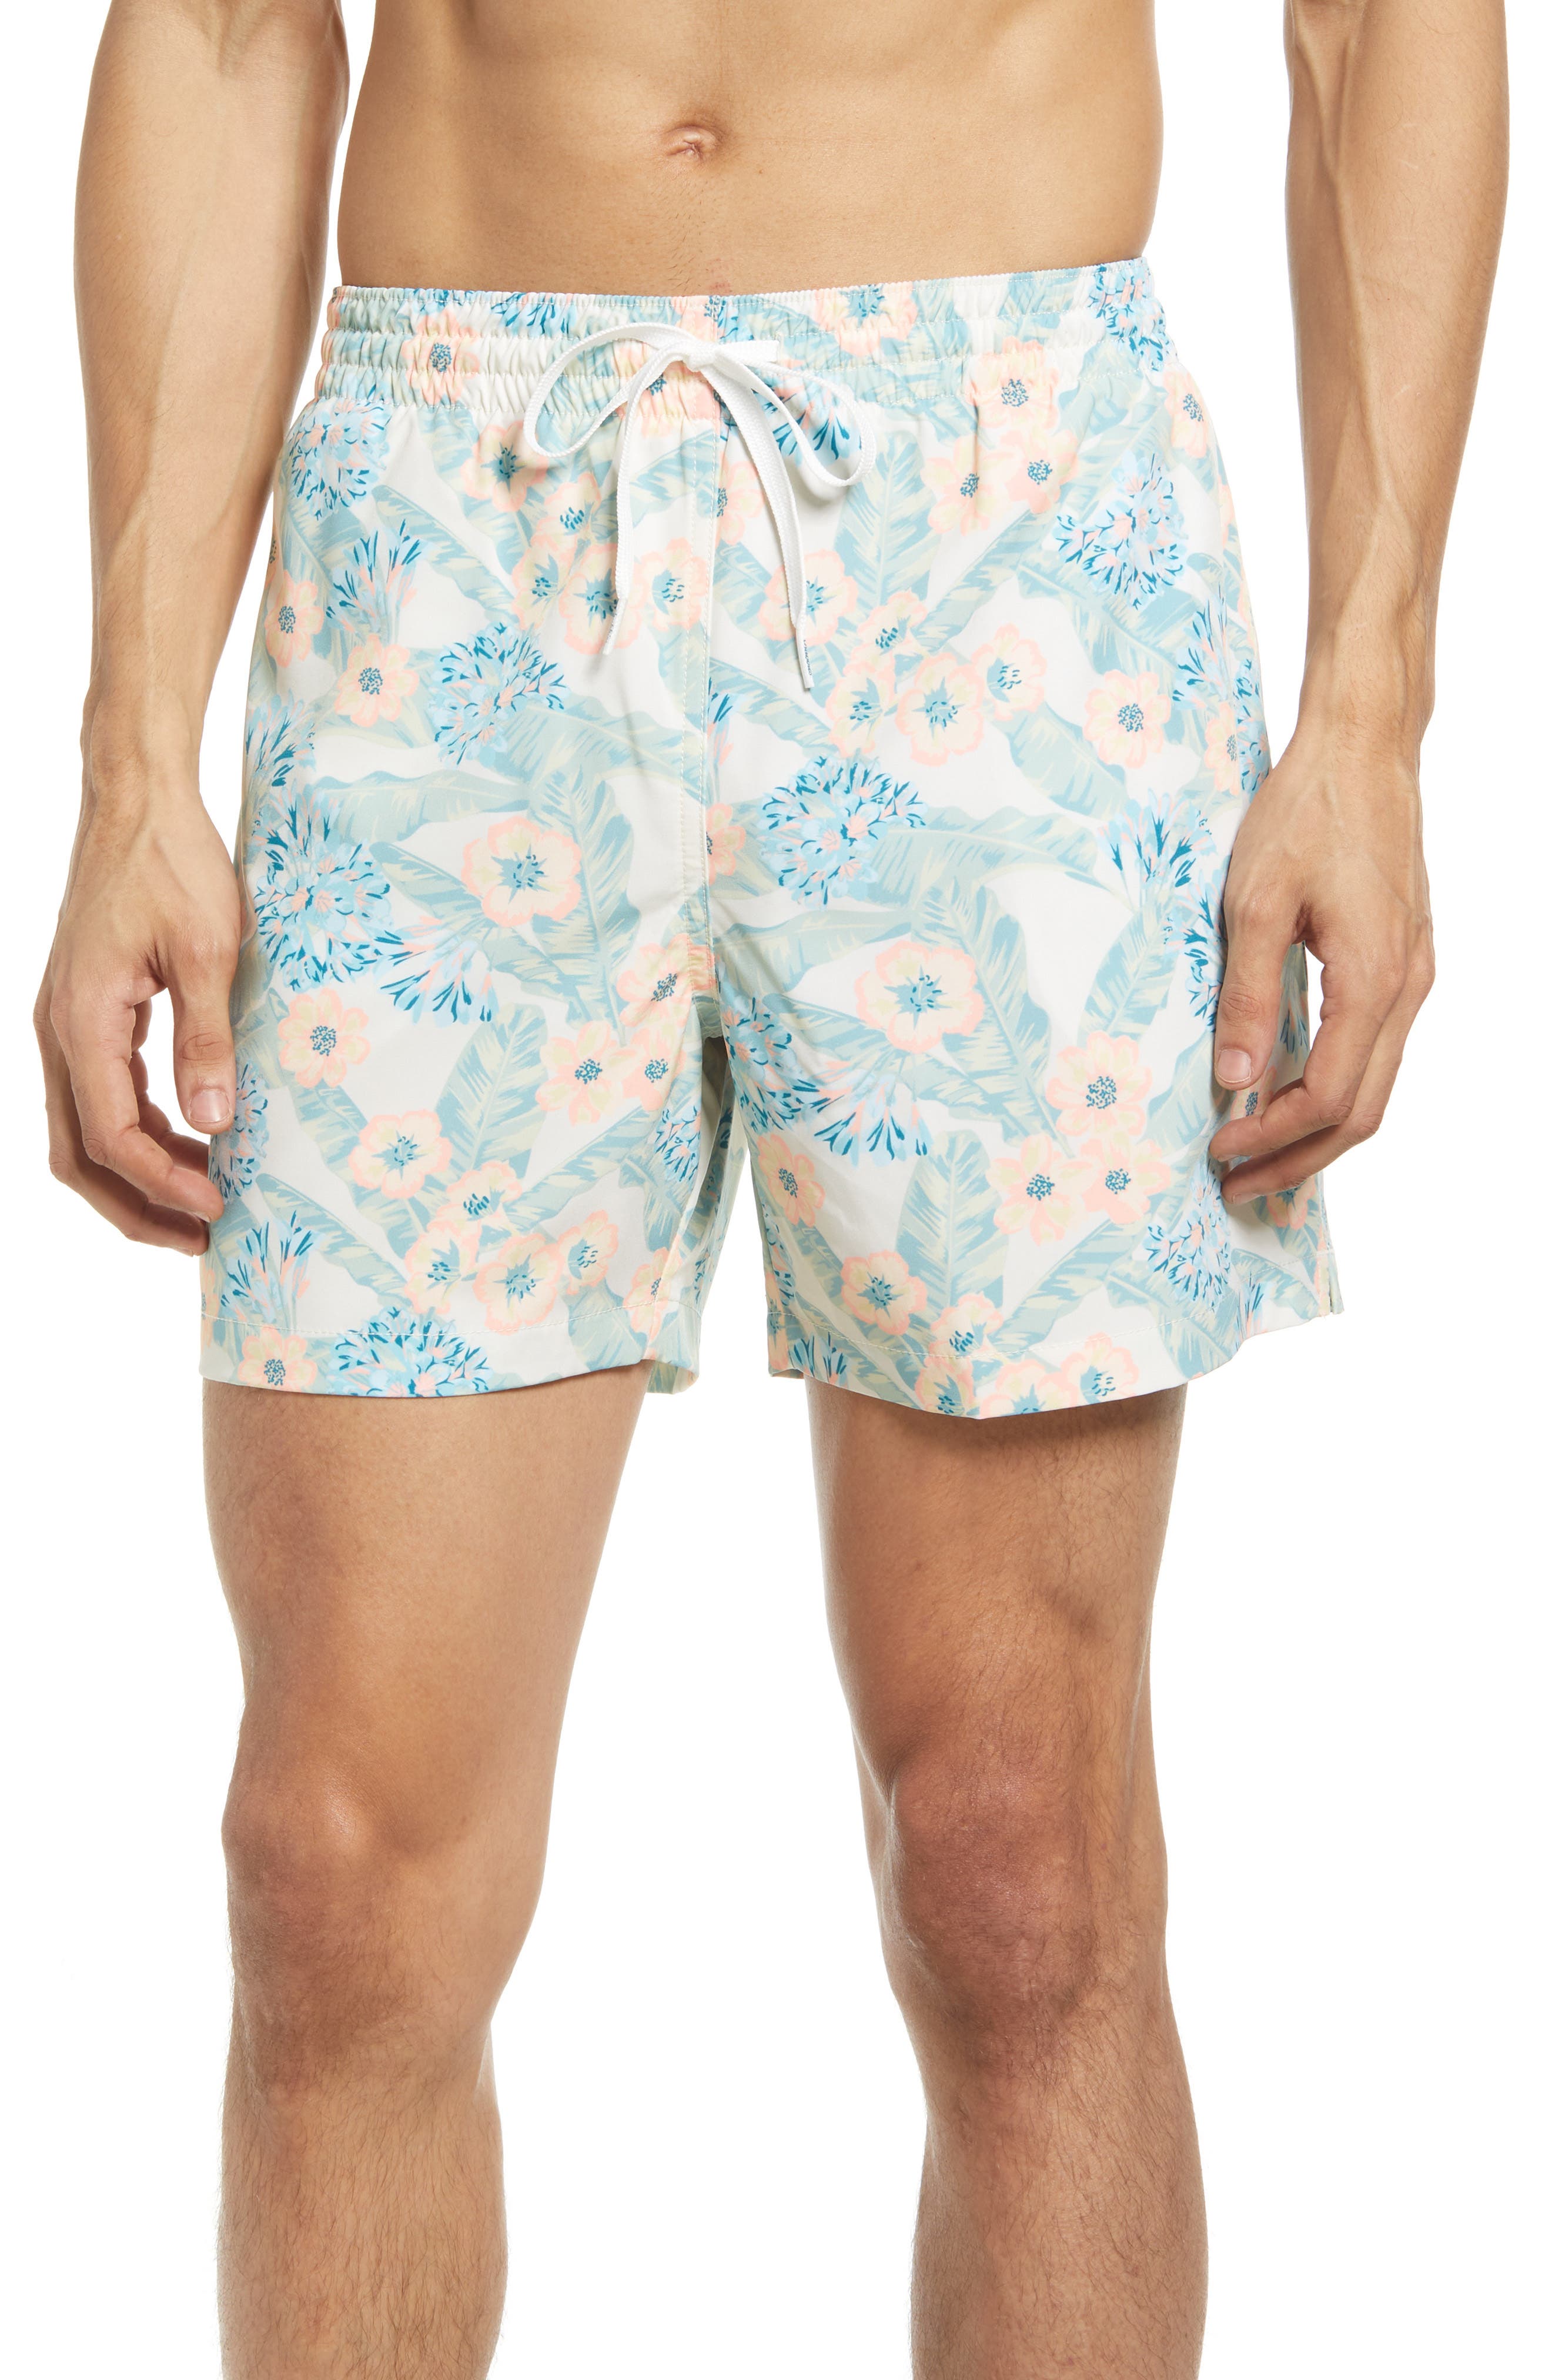 Scaling-men short Swim Trunks for Men Briefs Slim Quick Dry Surf Swimwear Watershorts Beach Short Pants Plus Size 